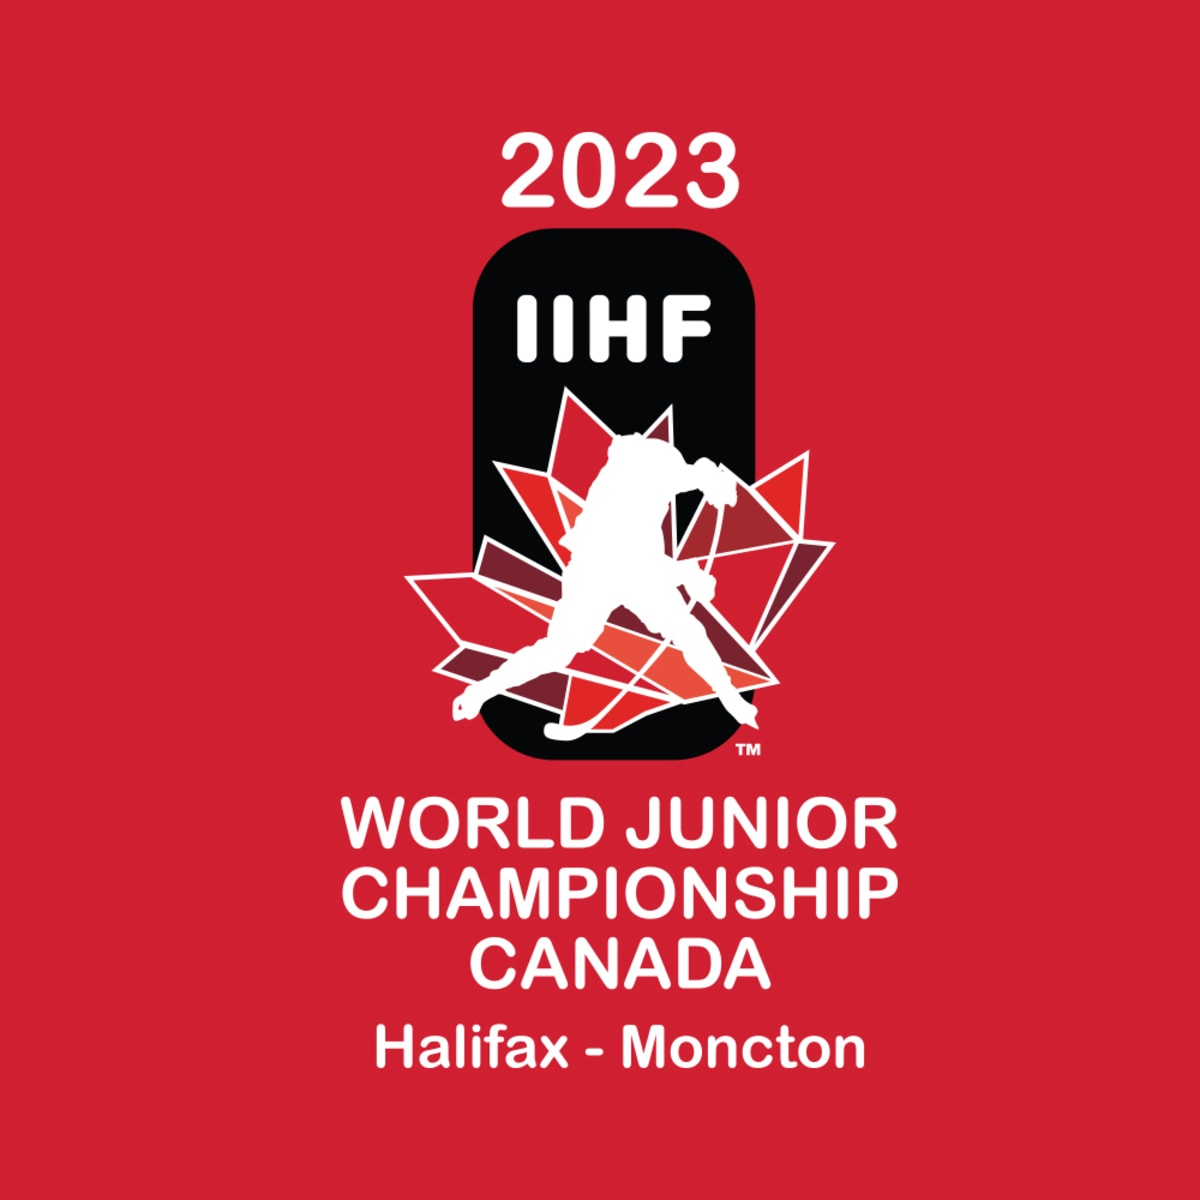 2023 IIHF World Championship - Wikipedia